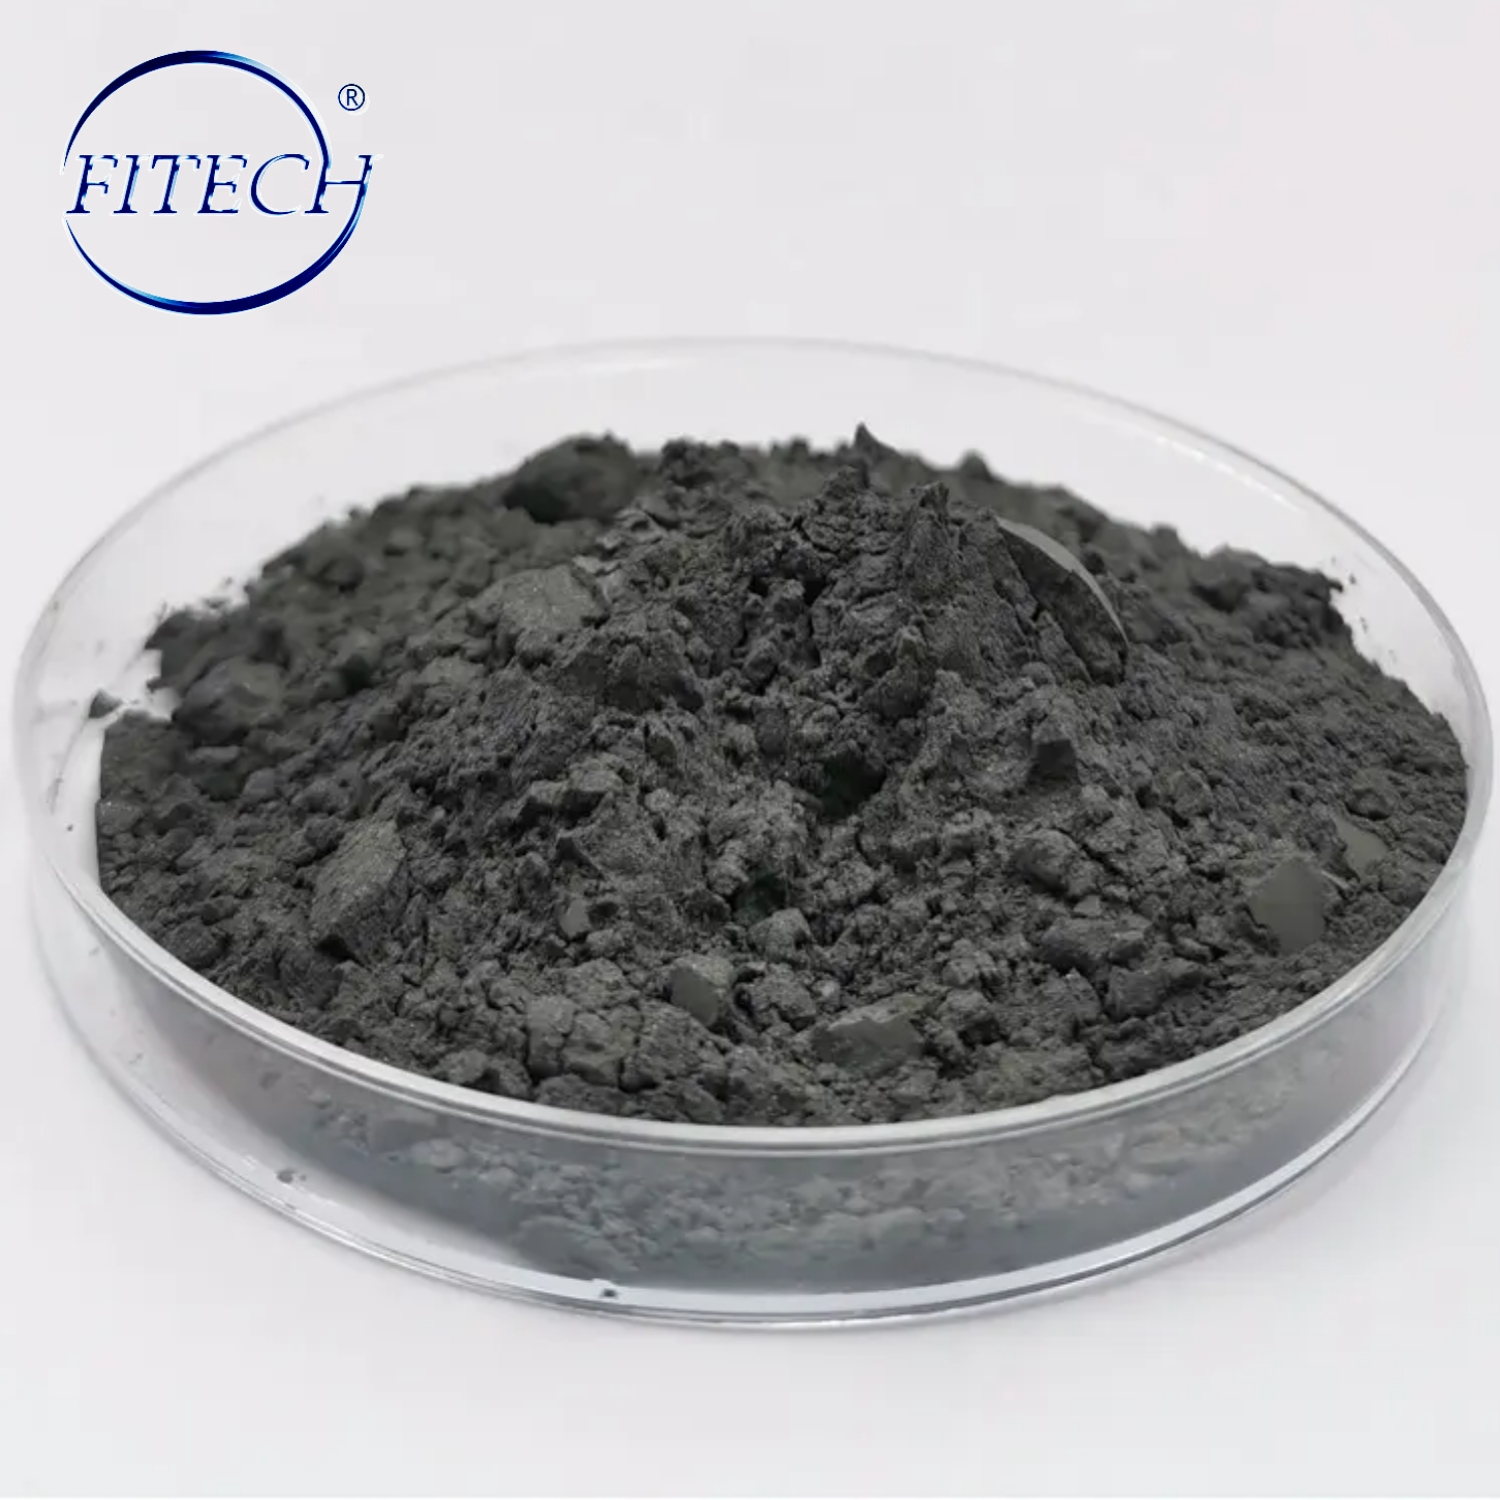 Sperical alloy Powder.fitech 1